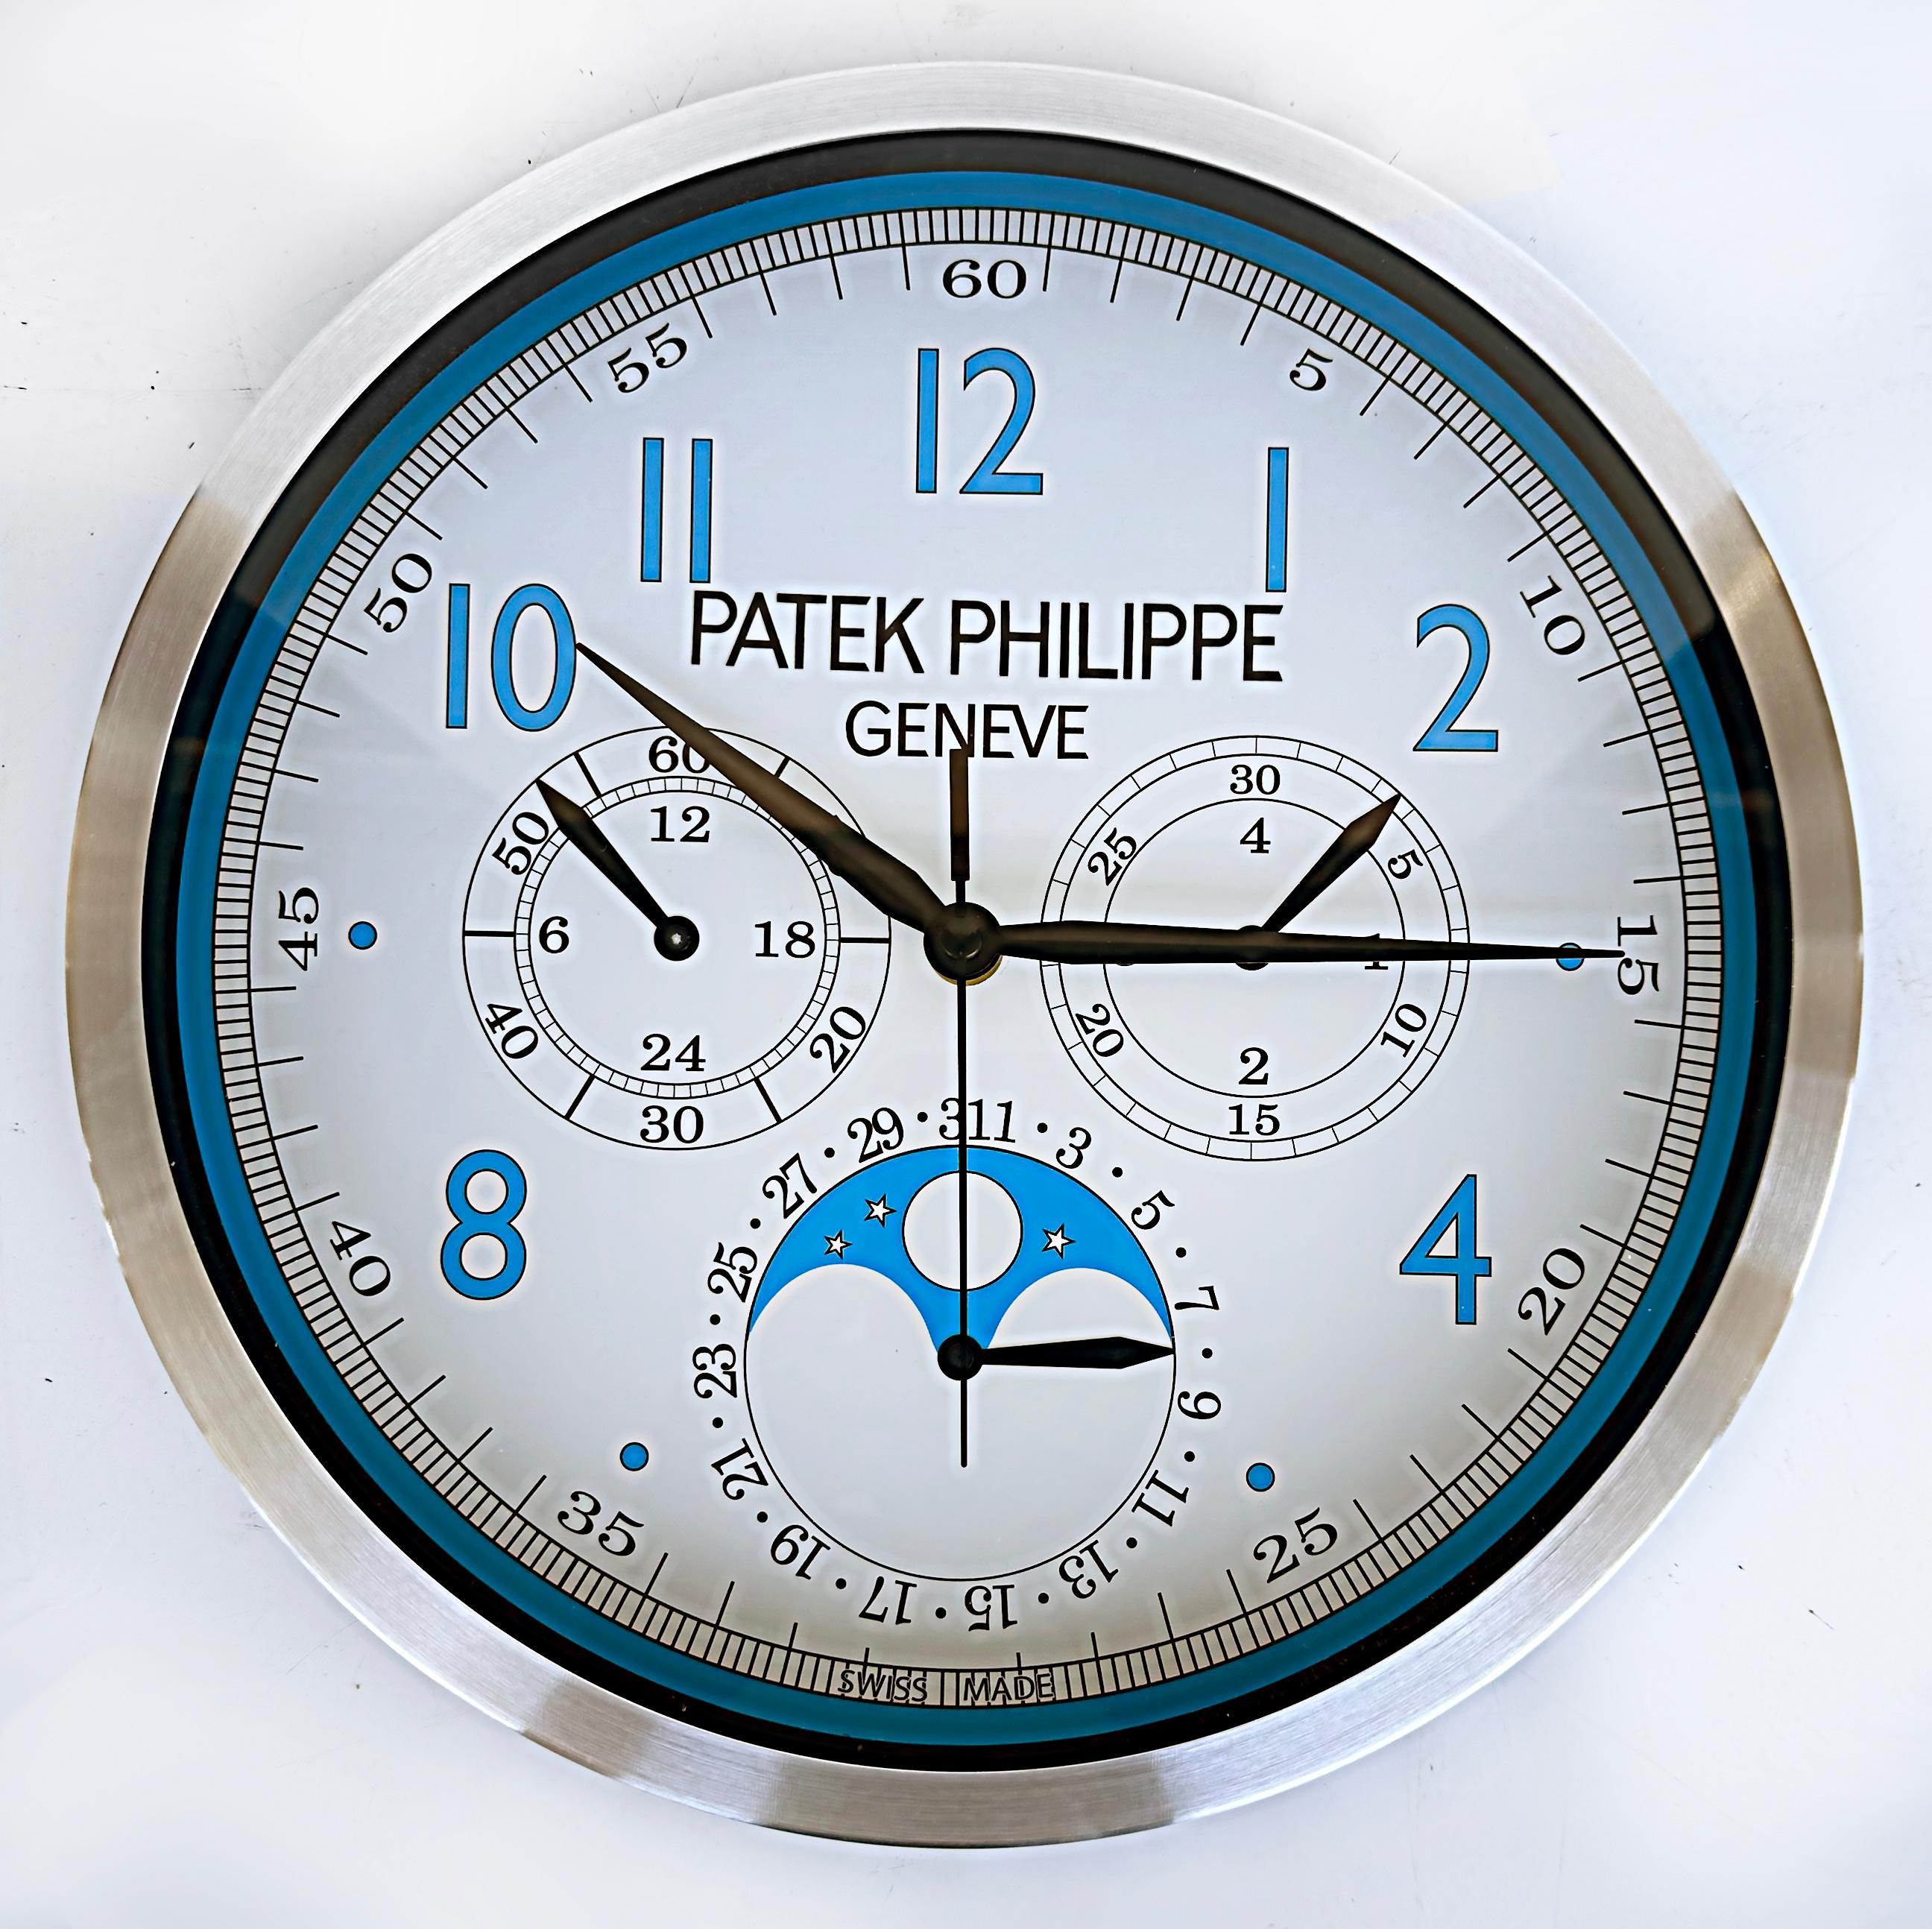 Patek Philippe Geneve, Switzerland Dealer's Advertising Chronograph Wall Clock 1